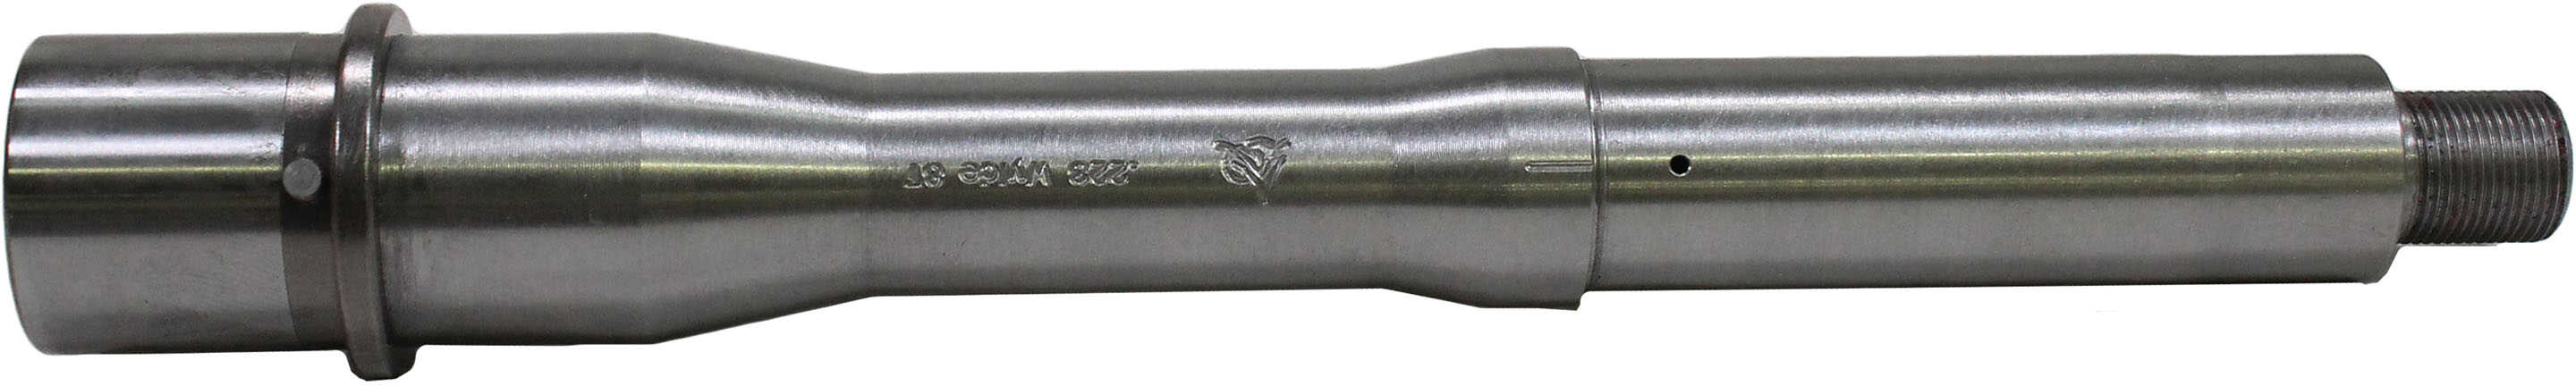 223Wylde Barrel 7.50" Medium Profile Pistol Gas with Tunable Block Md: B-223-7.5-P-TG